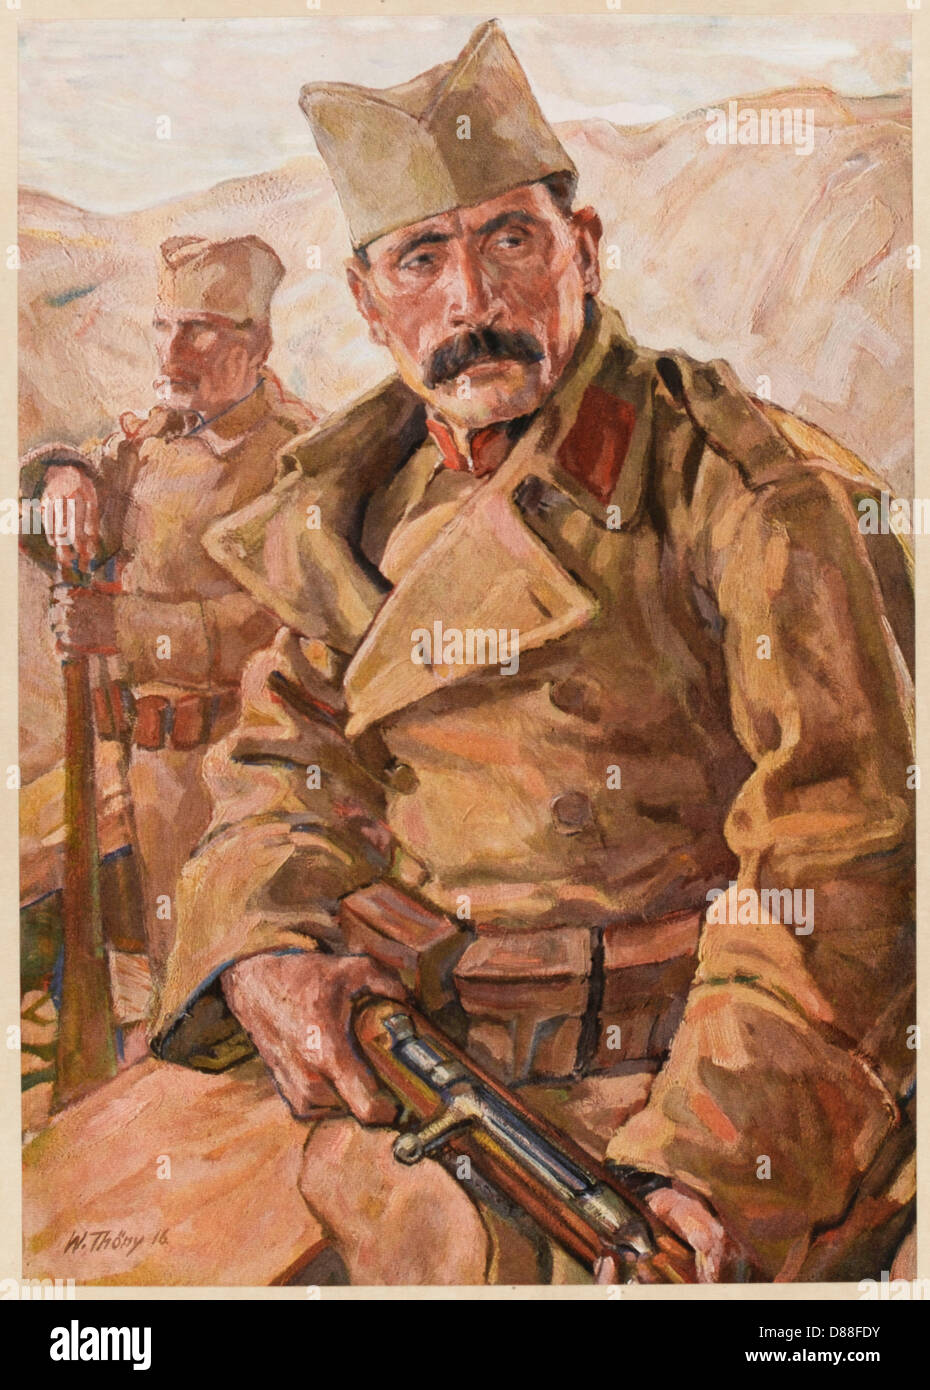 WW1 SERBIAN SOLDIERS Stock Photo